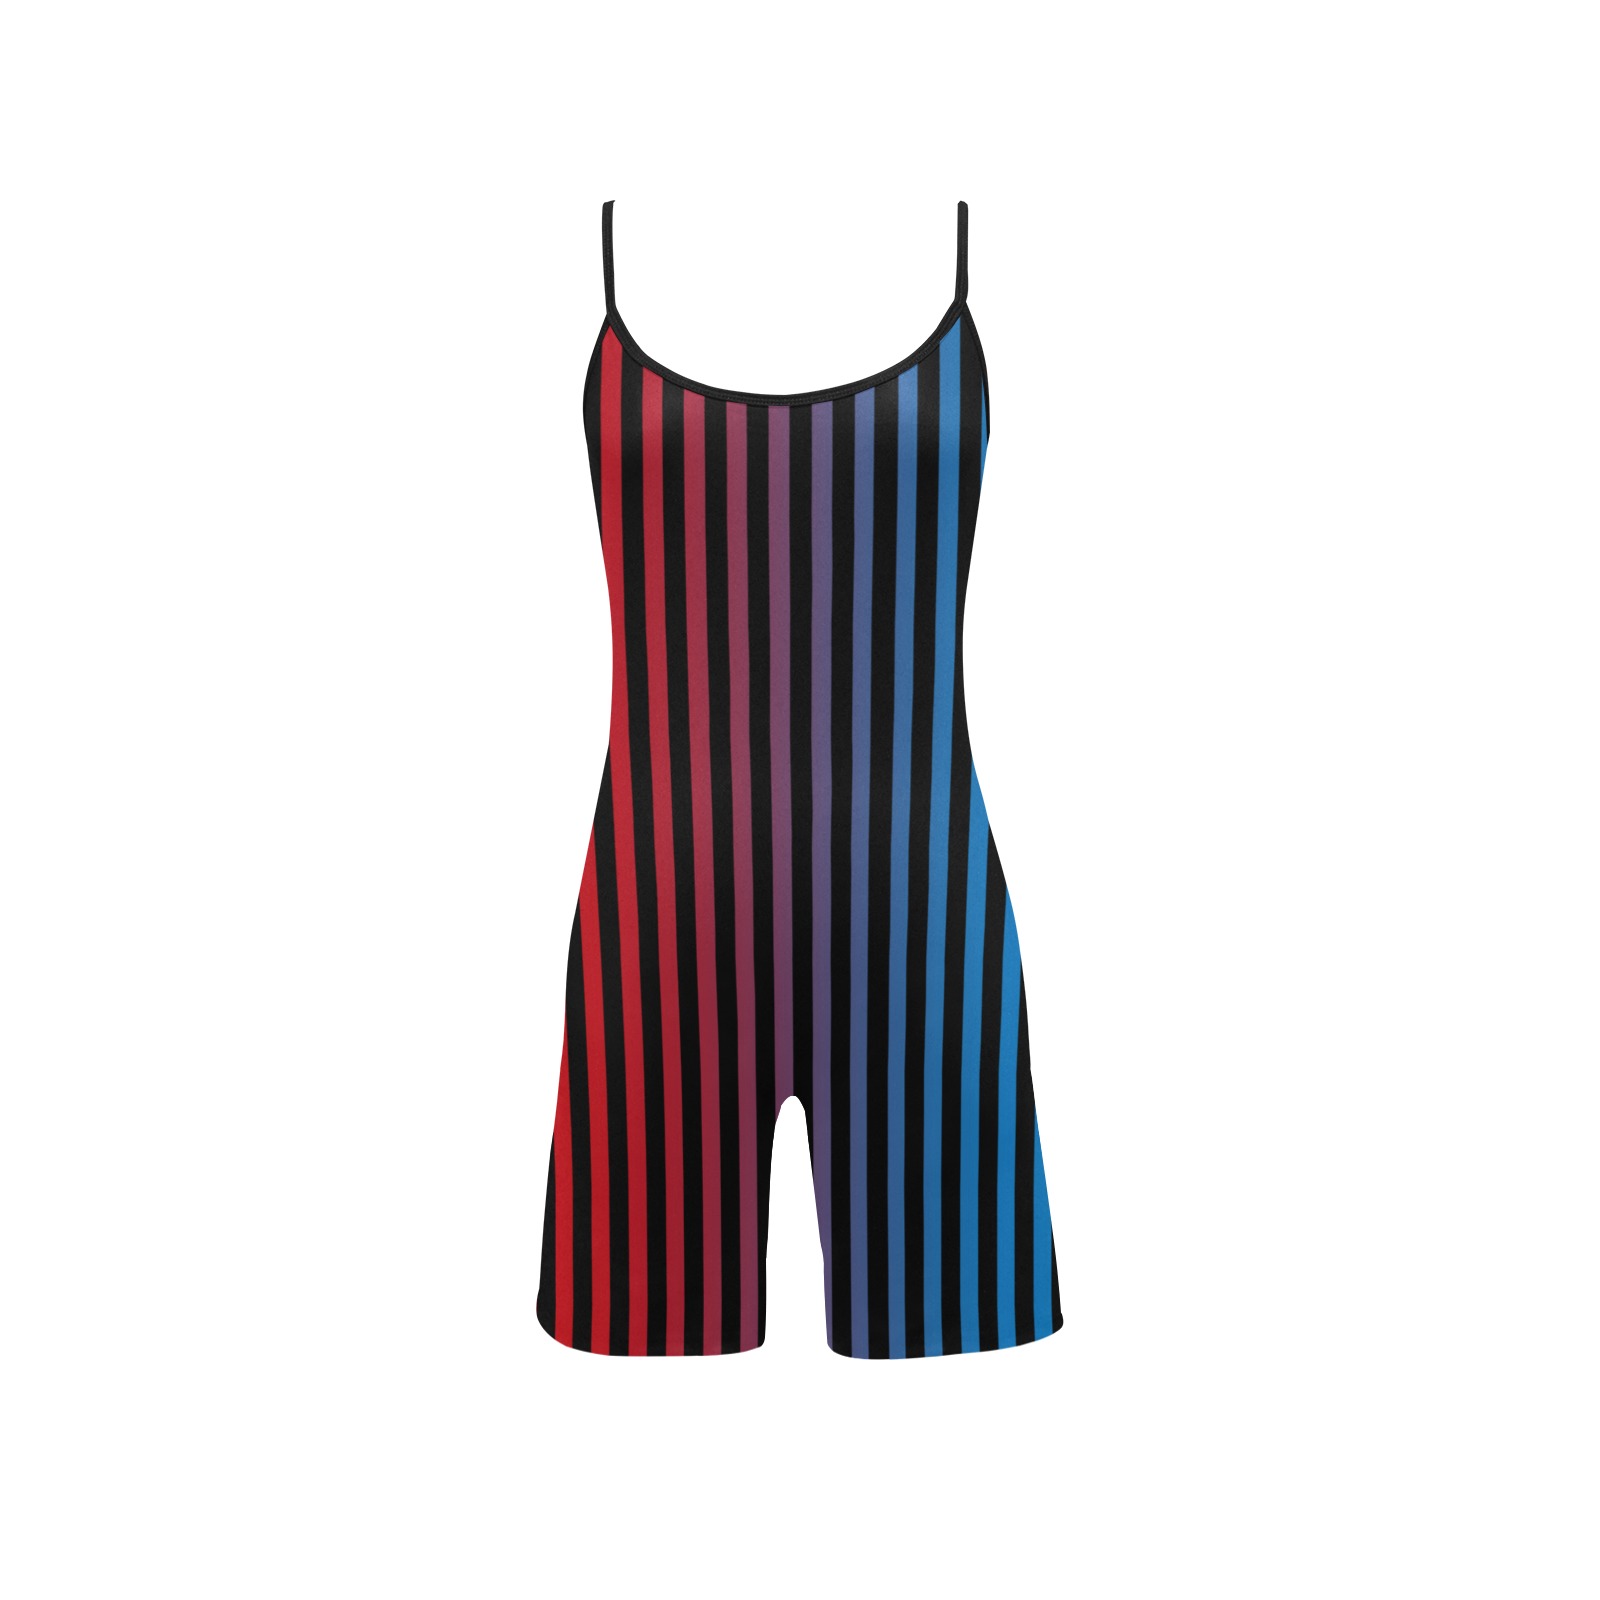 Stripes Fade Blue, Black, Red Women's Short Yoga Bodysuit